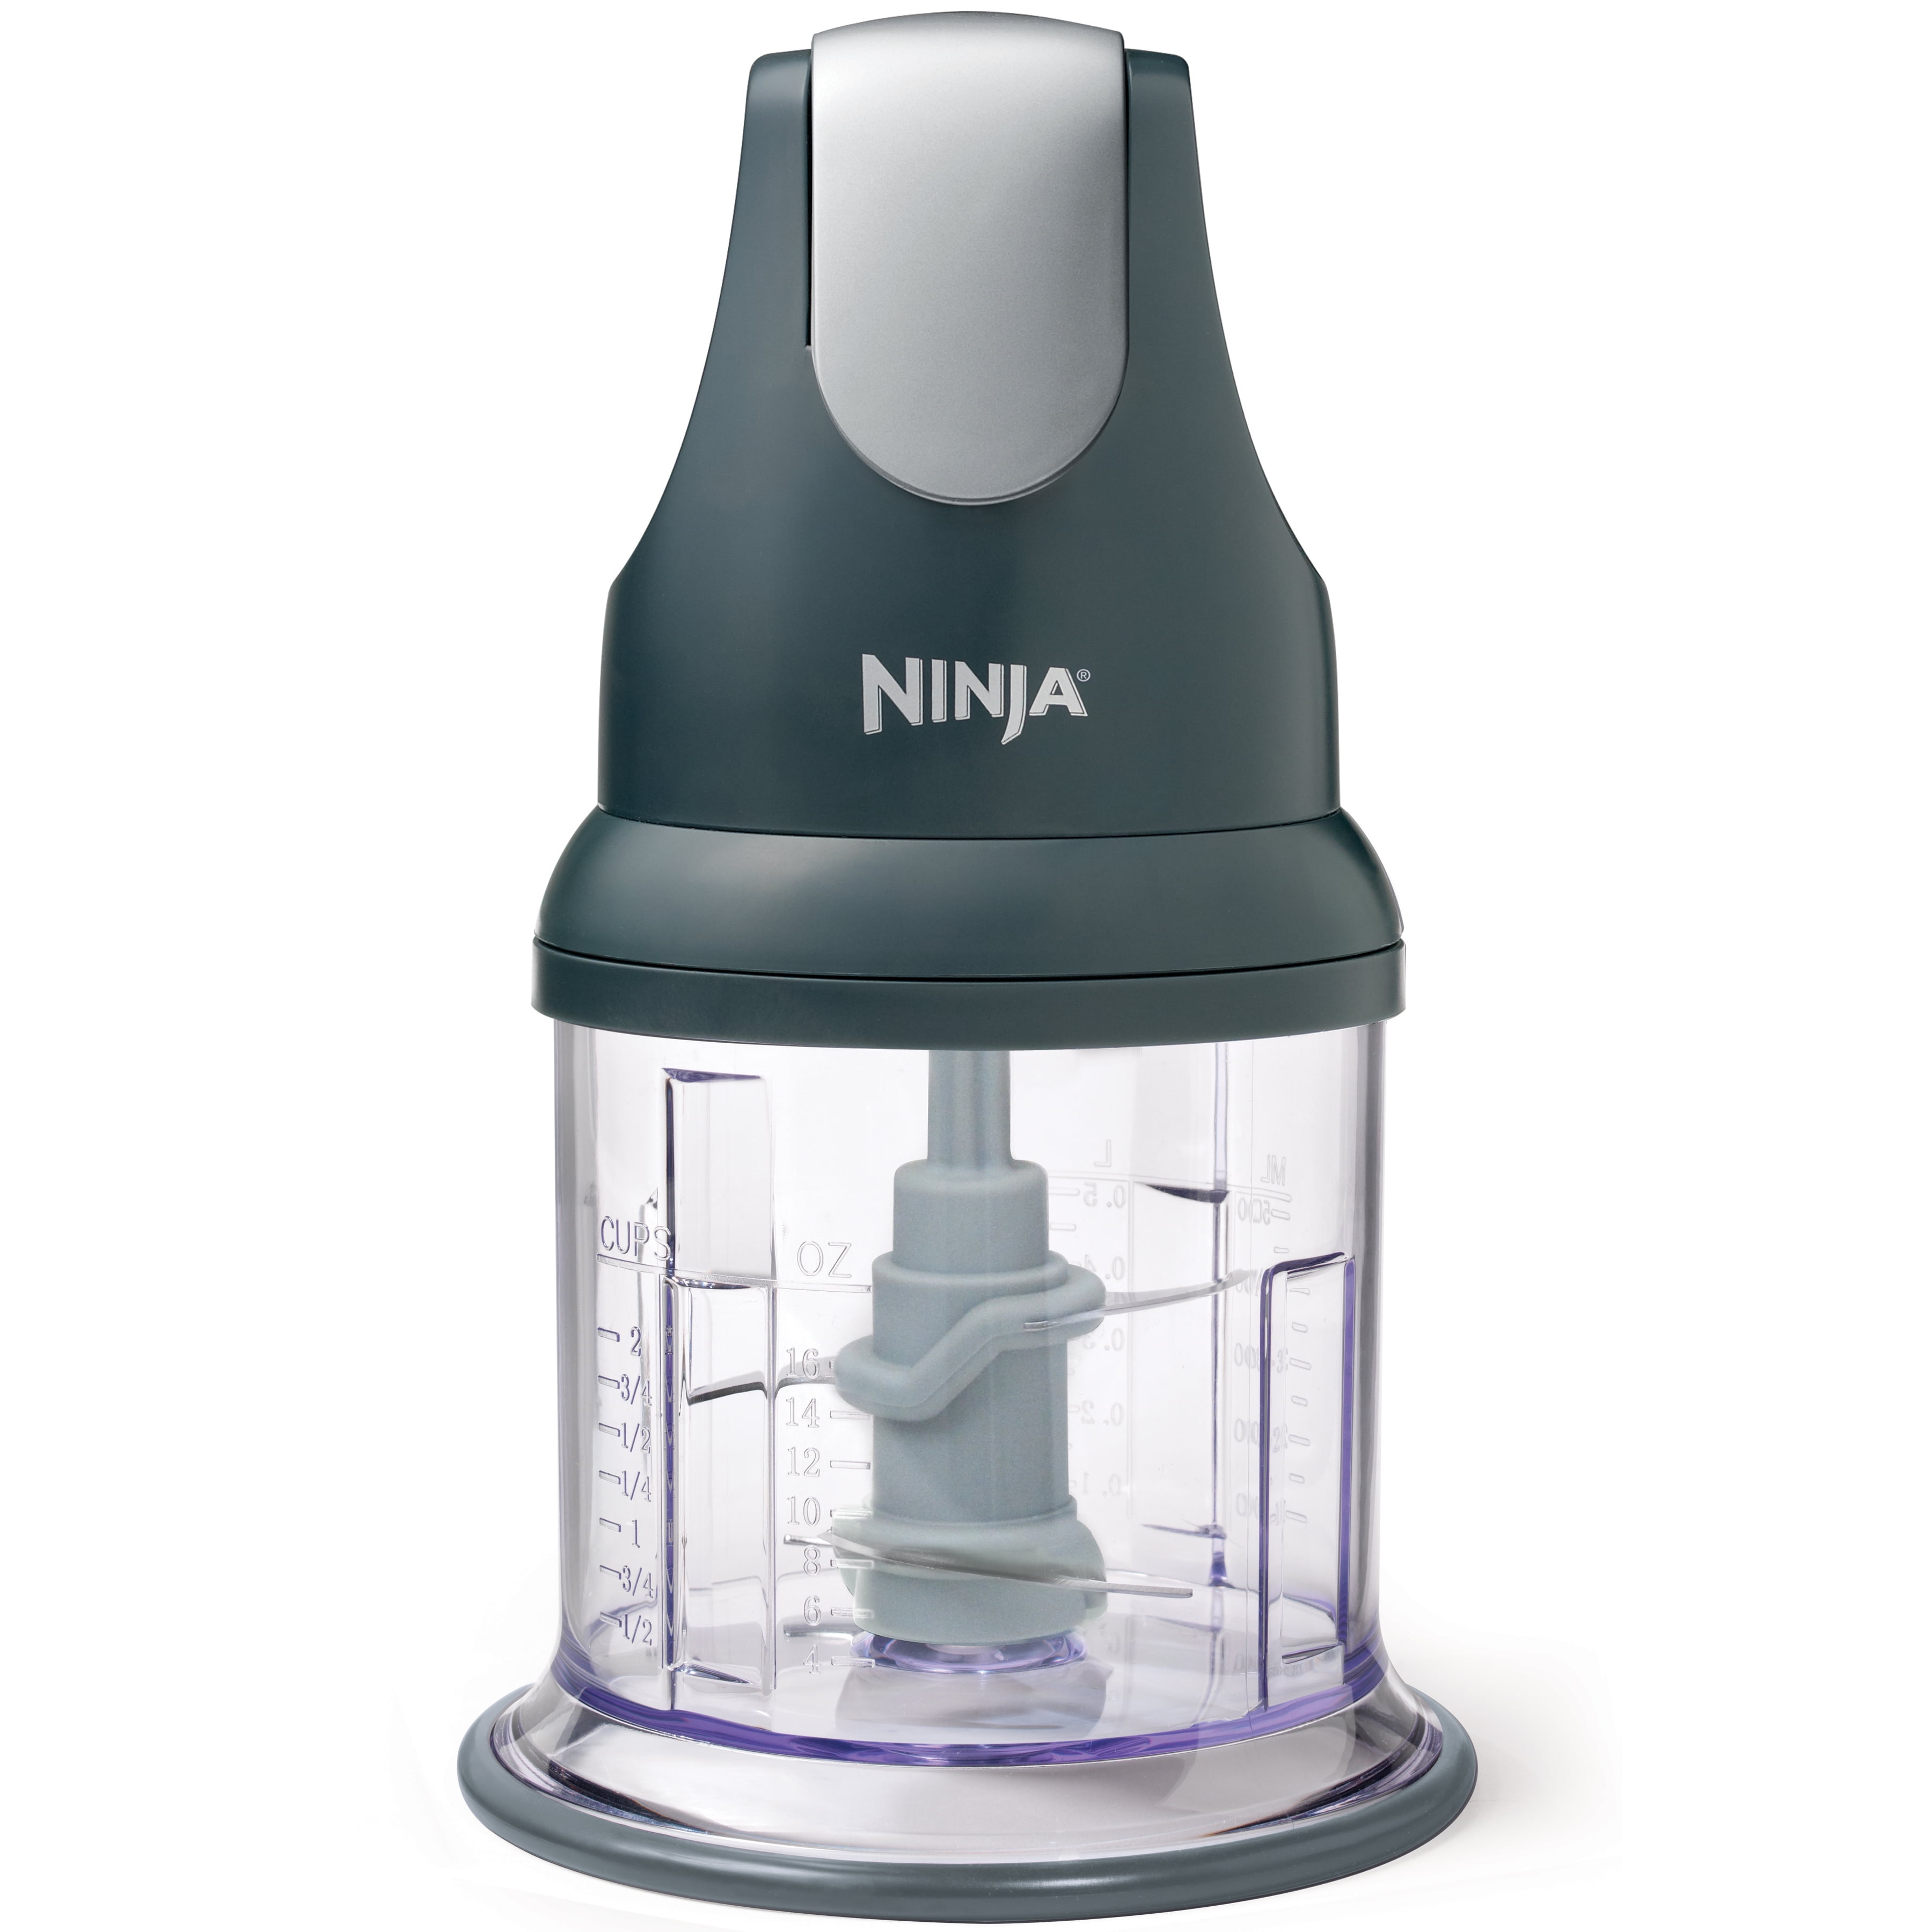 Ninja Mini Chopper: Compact Electric Food Processor With Extreme